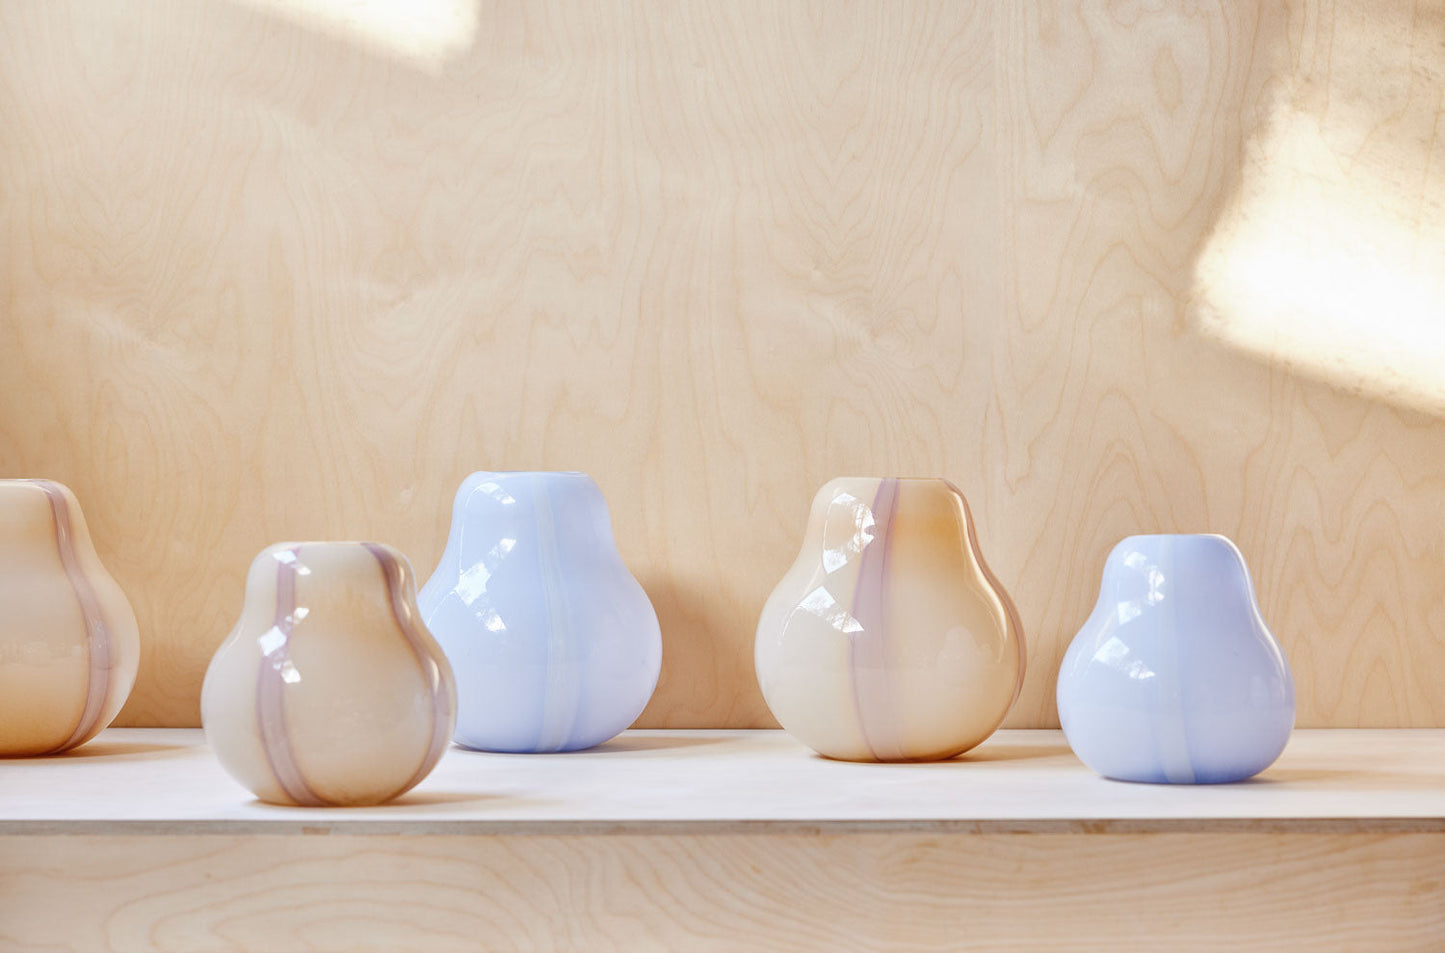 OYOY LIVING Kojo Vase - Large Vase 501 Lavender / White